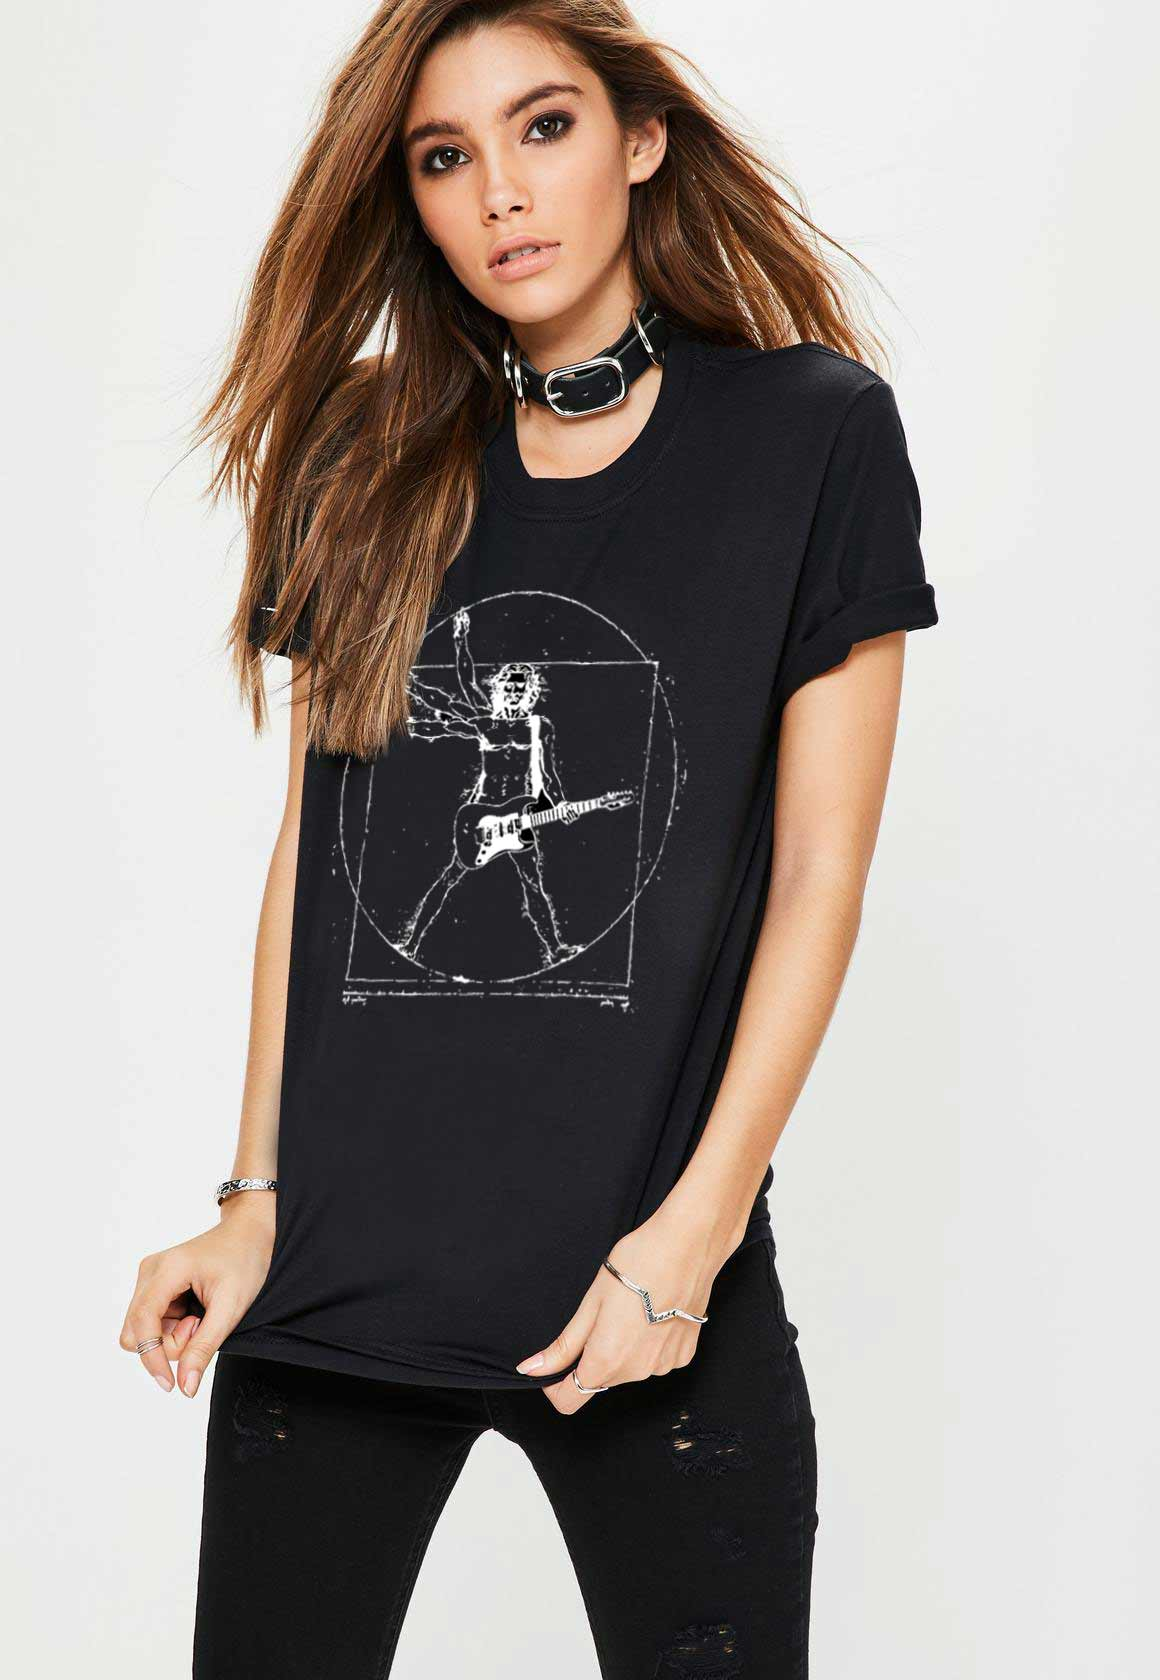 T-Shirt Da Vinci Rock Man Woman's